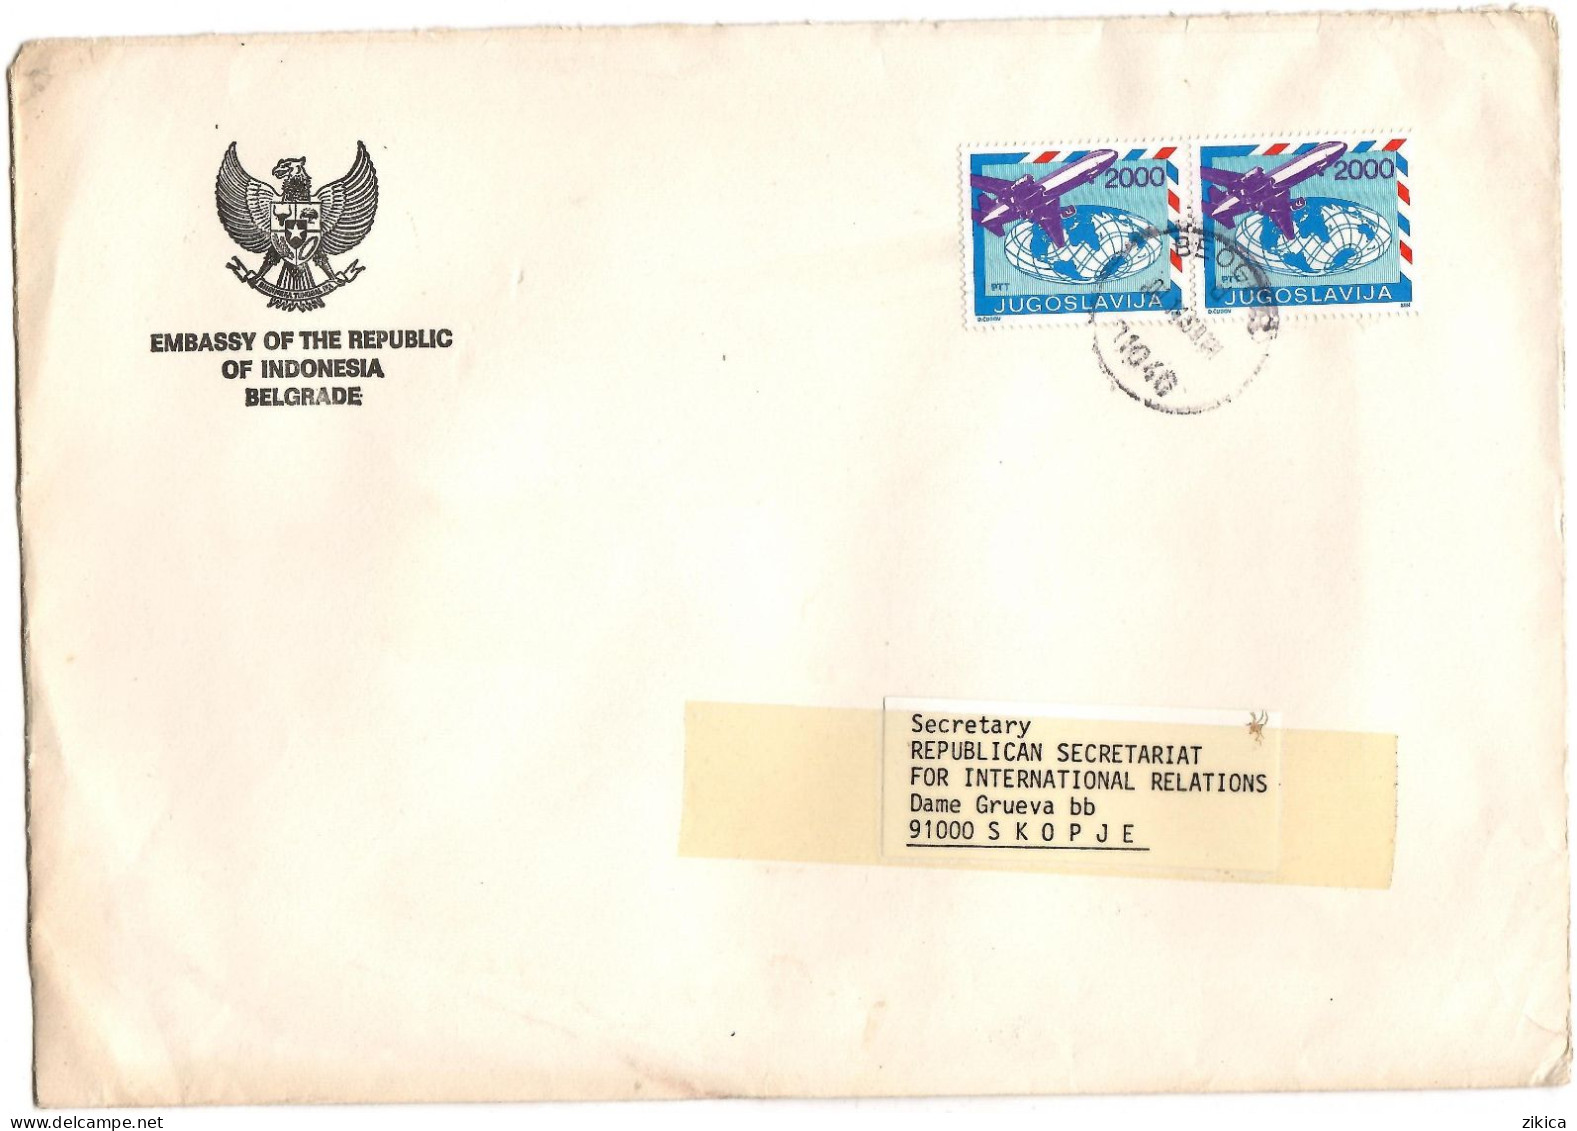 BIG COVER - Embassy Of THE REPUBLIC OF INDONESIA - Belgrade / Yugoslavia,canceled 1989 - Indonésie